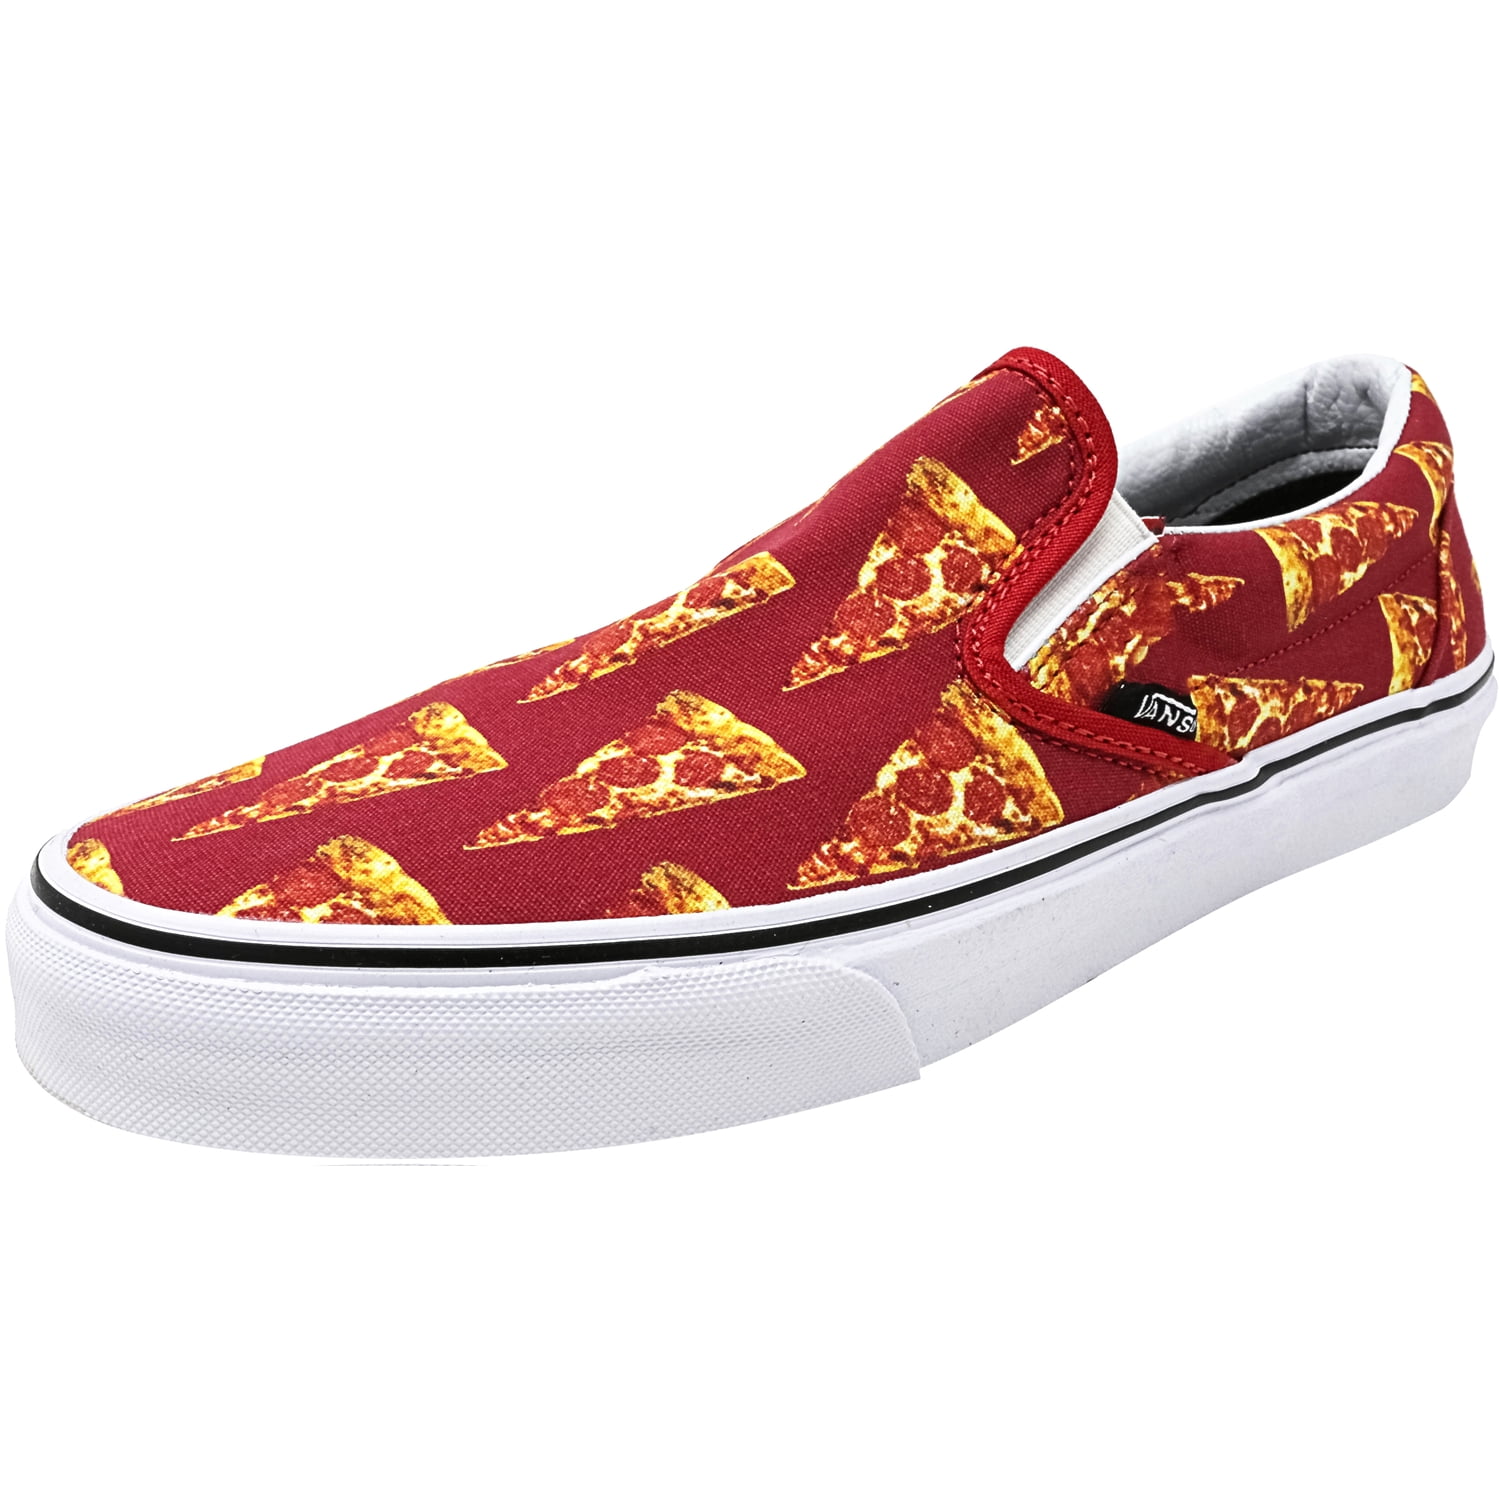 tæmme Ewell gødning Vans Classic Slip-On Late Night Mars Red / Pizza Canvas Skateboarding Shoe  - 9.5M 8M - Walmart.com